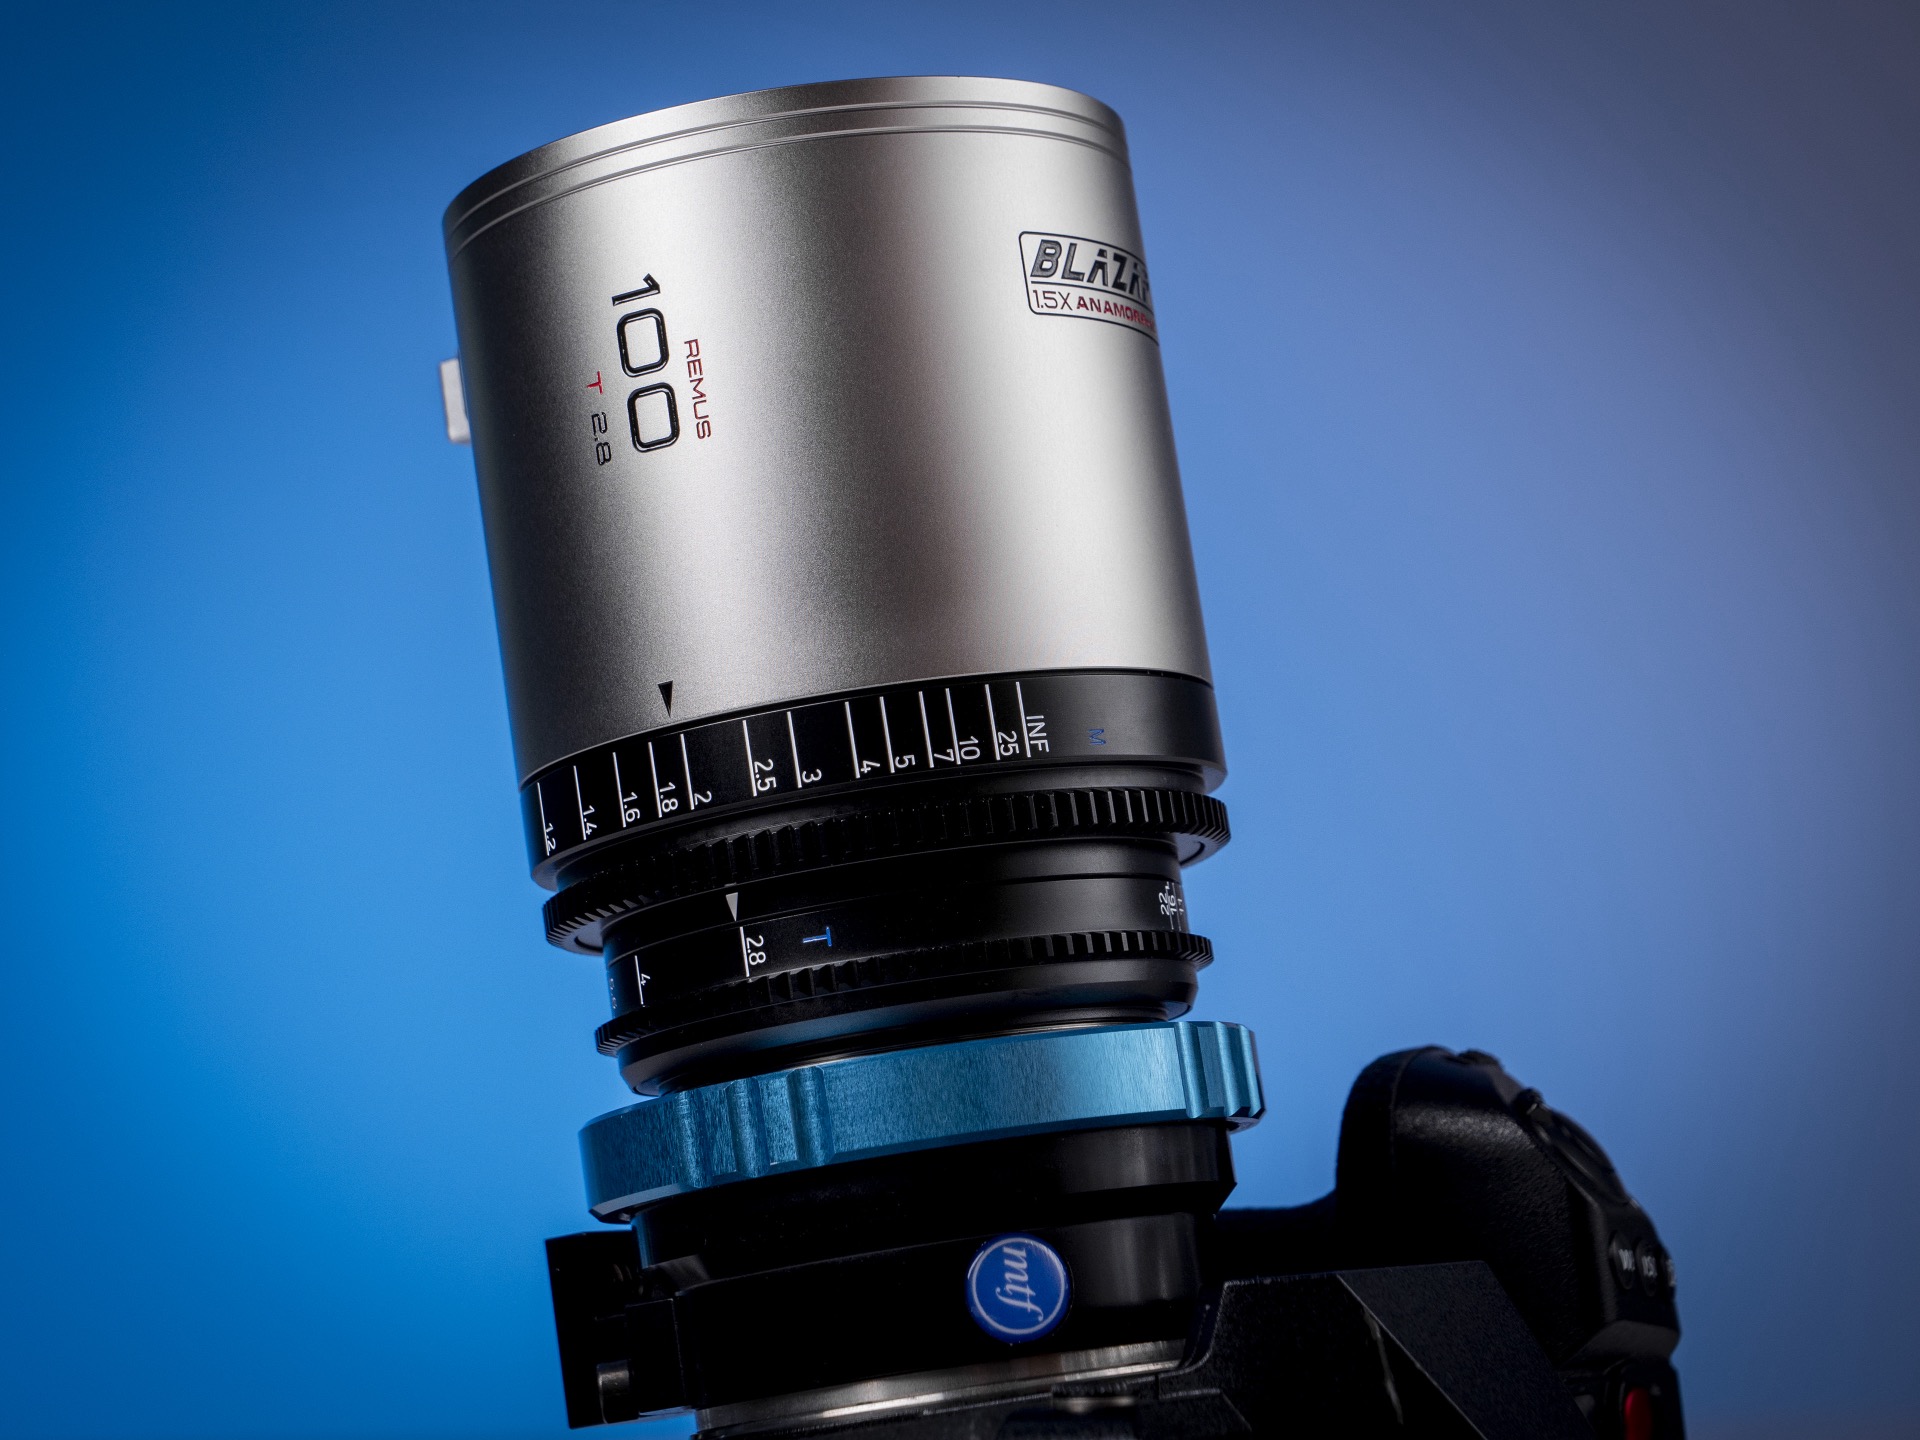 Review: Blazar Remus 1.5x anamorphic lenses 25